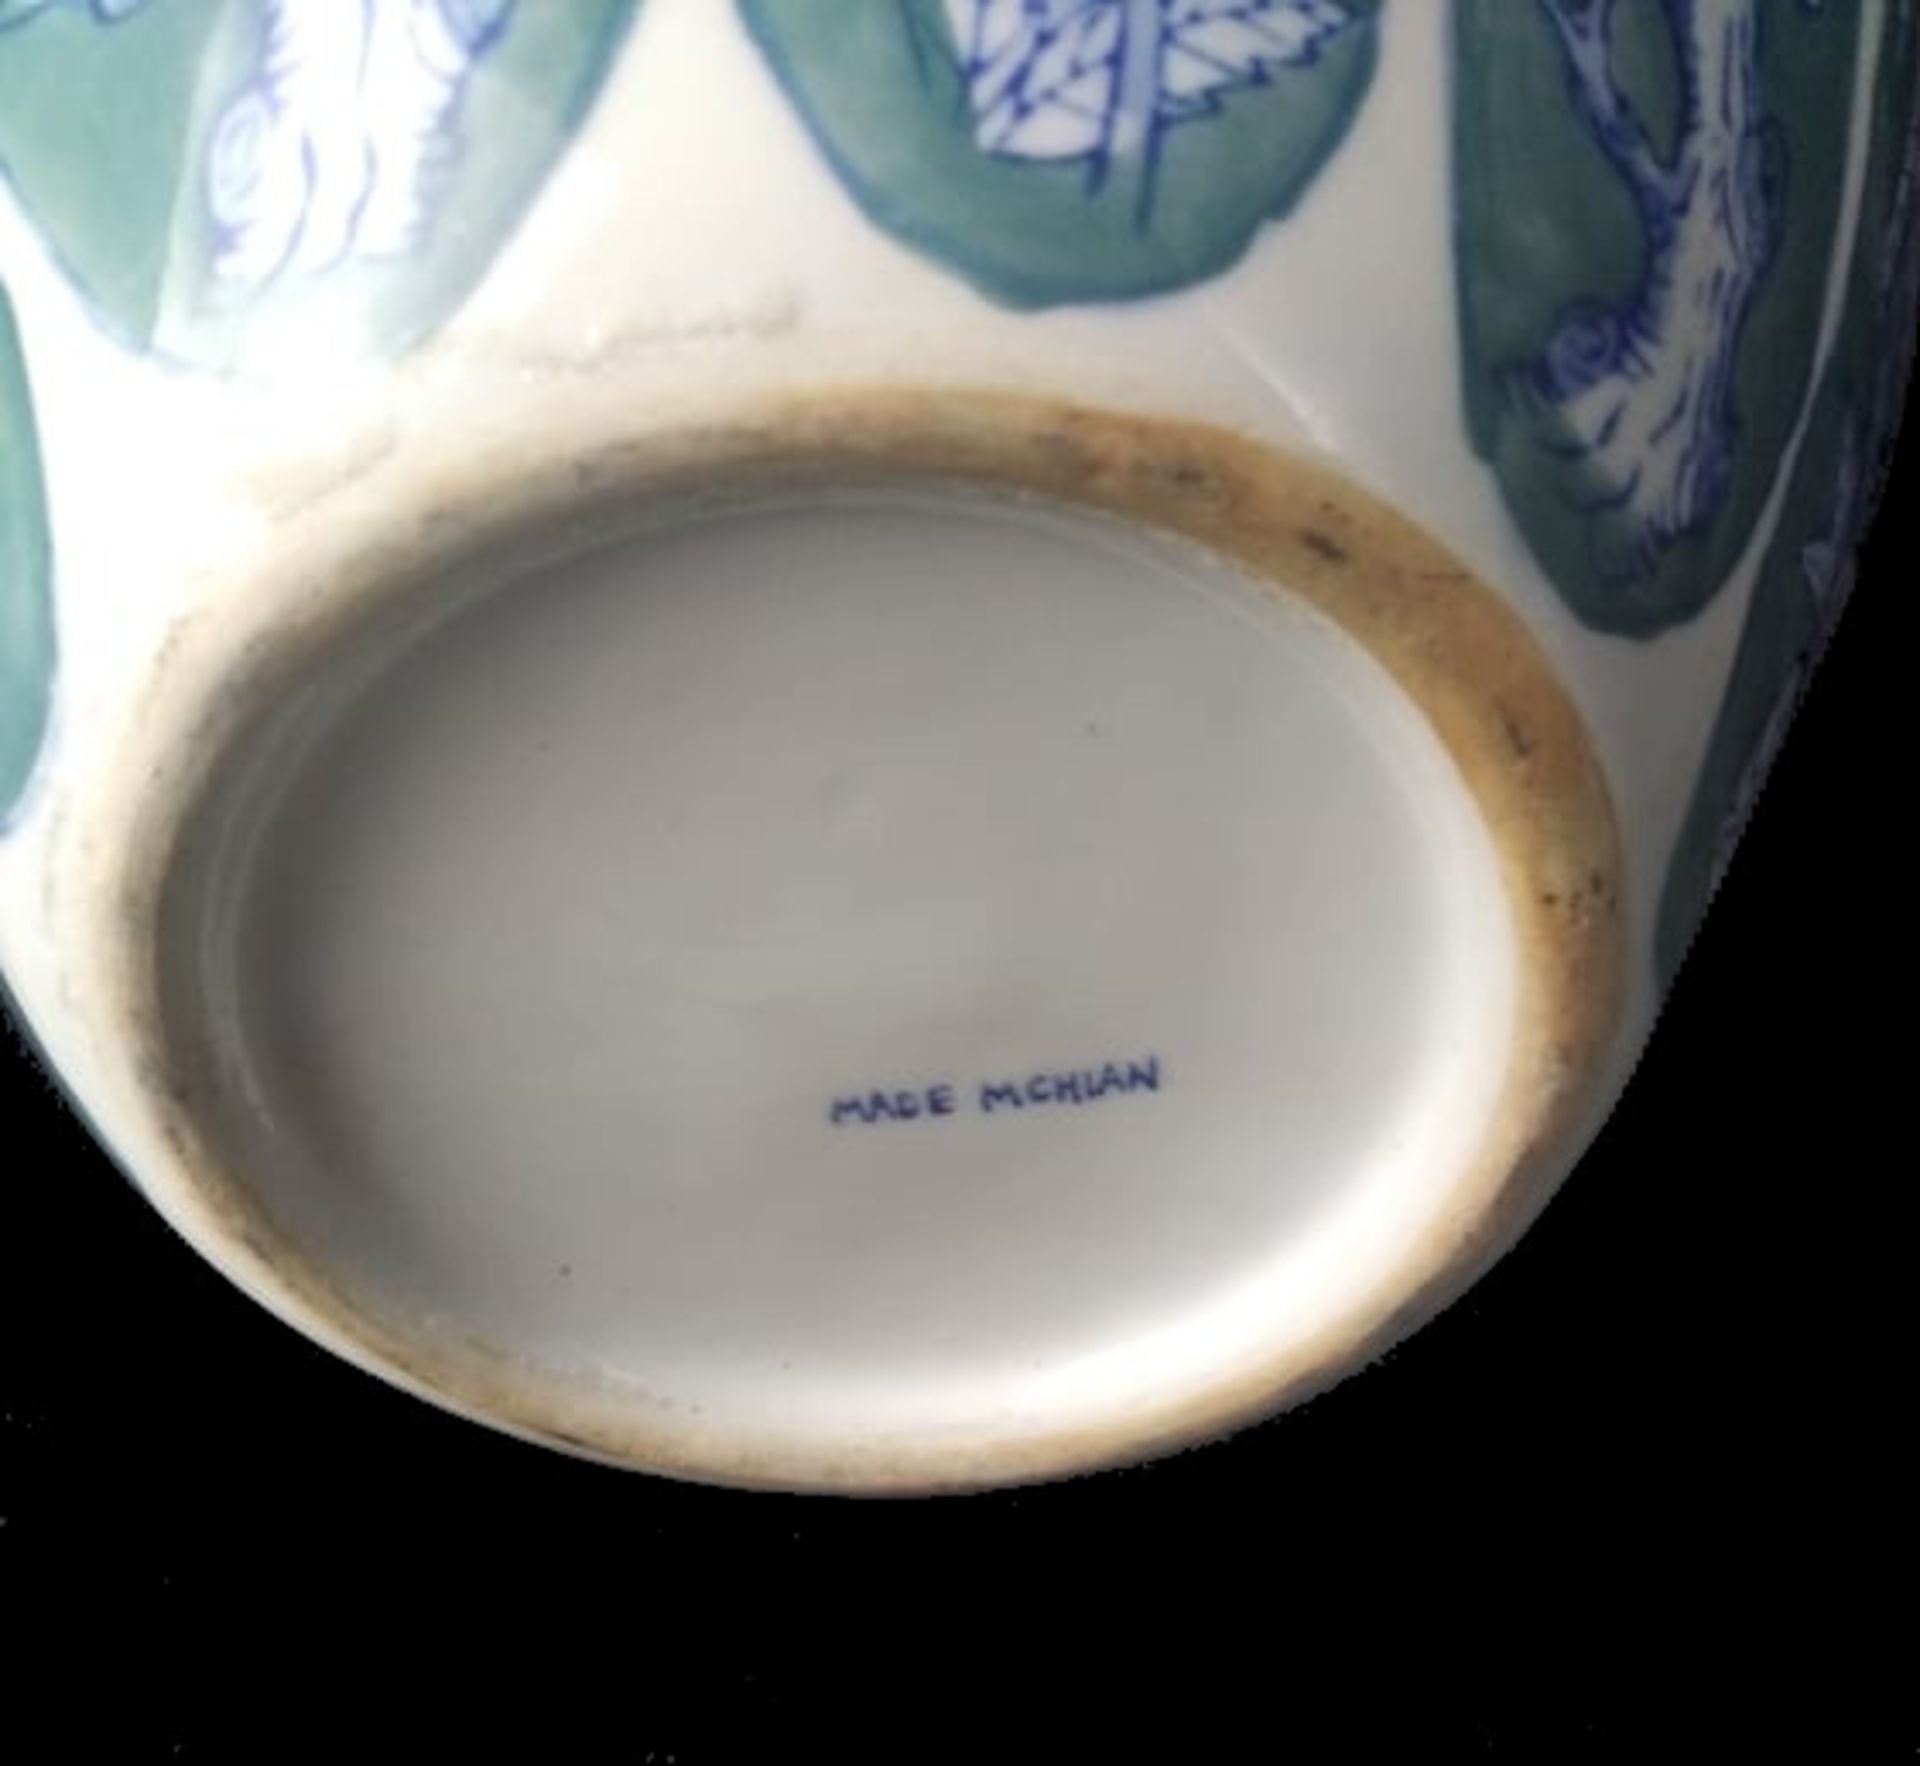 Vase - Image 2 of 2